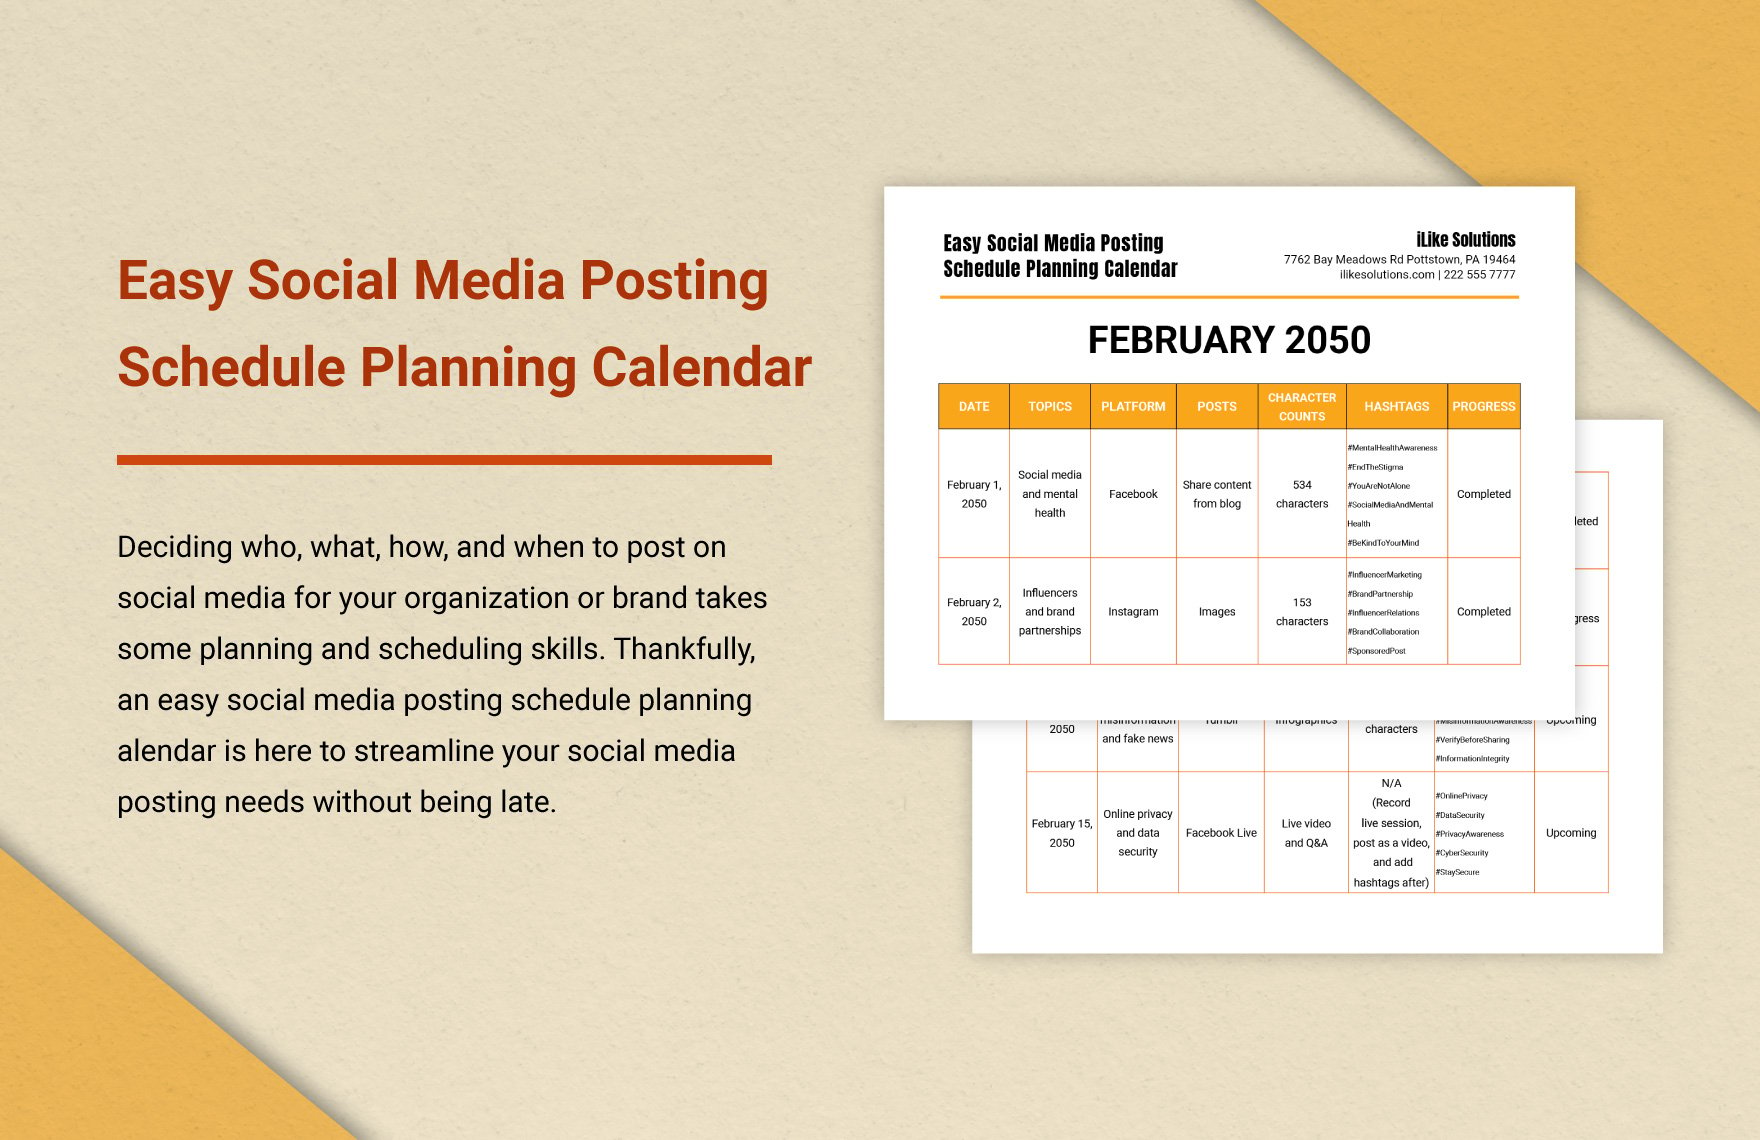 Easy Social Media Posting Schedule Planning Calendar